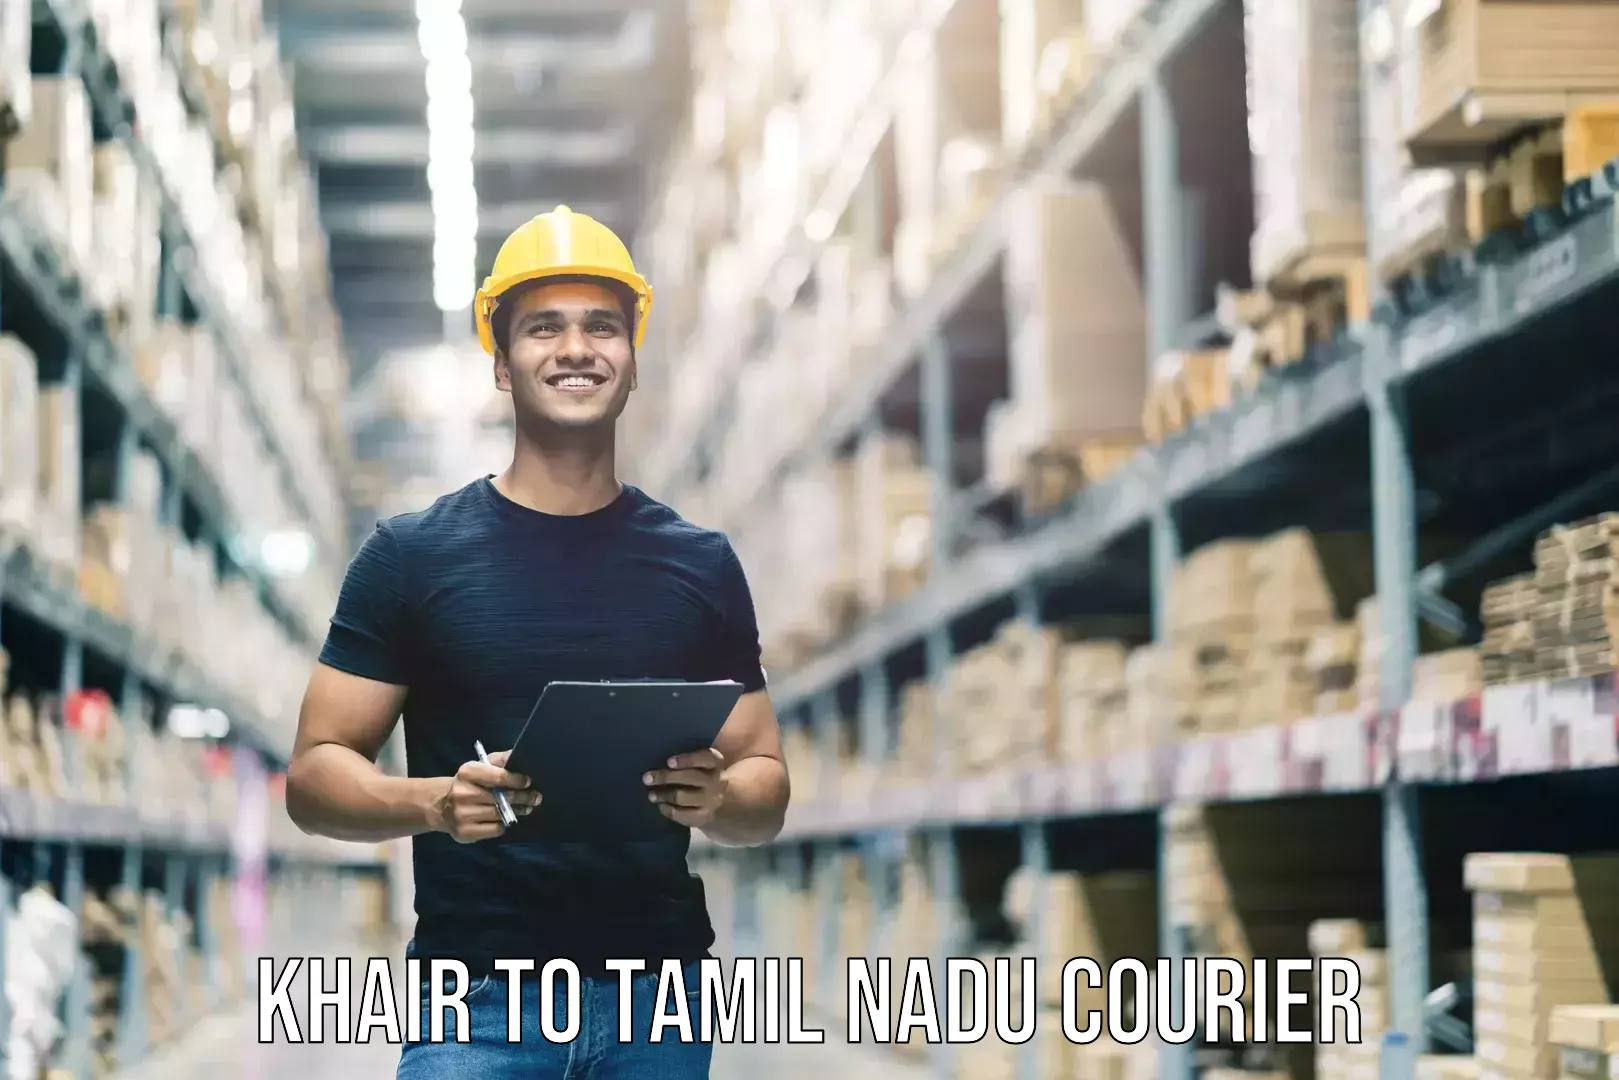 Luggage transport consultancy Khair to Tamil Nadu